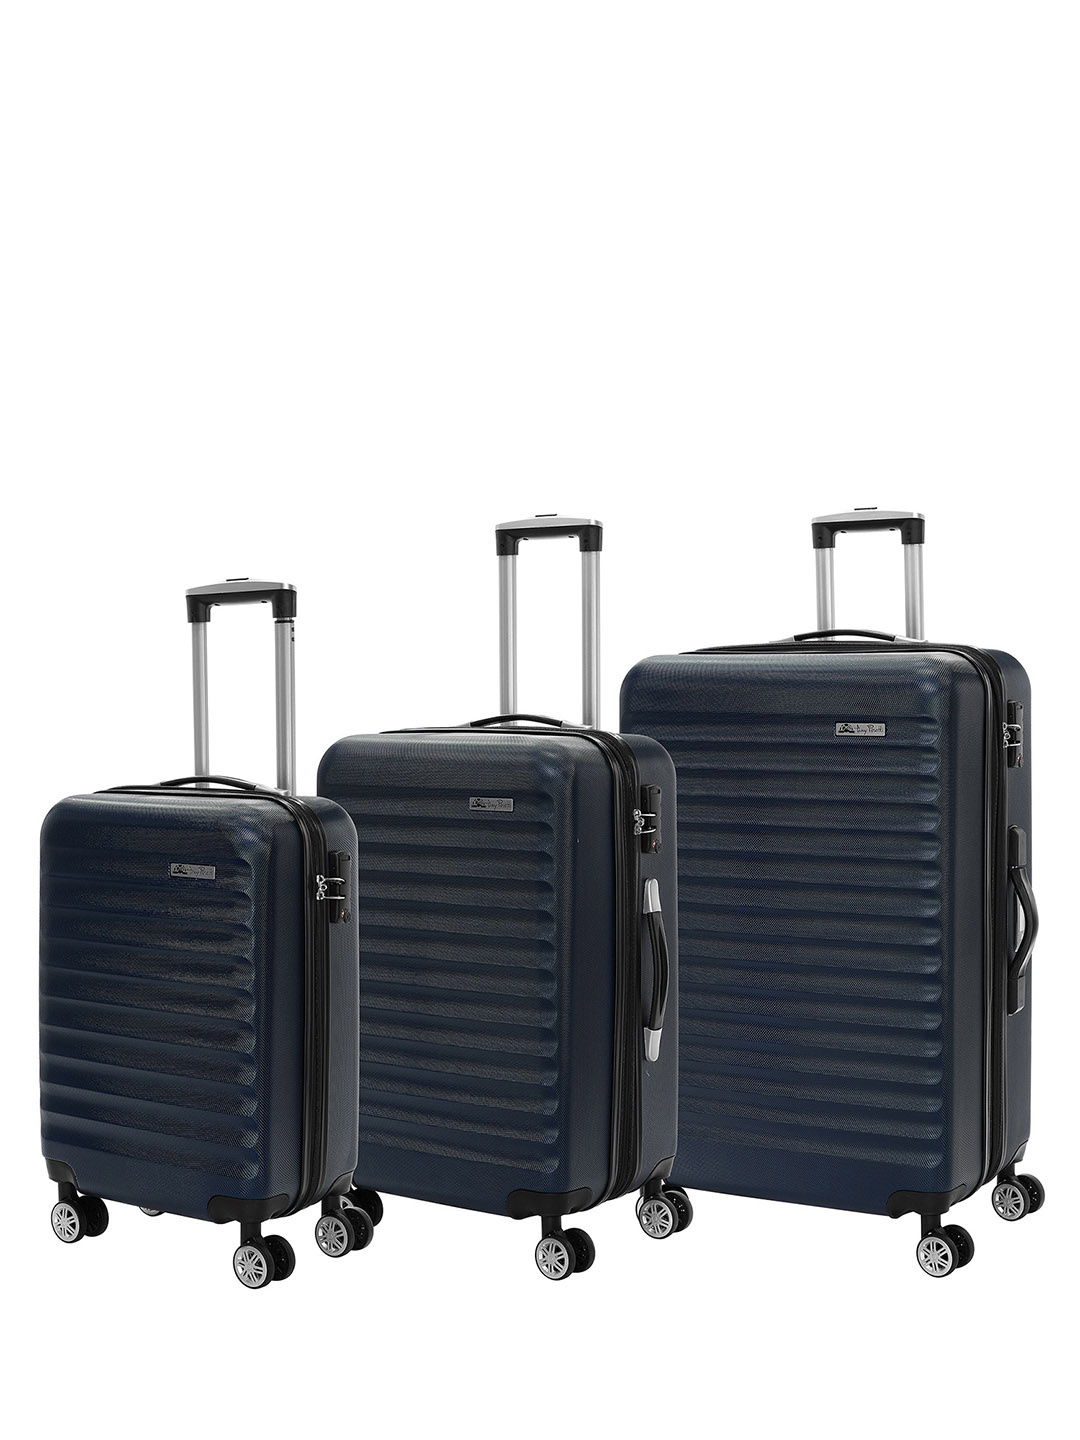 Фото Маленький чемодан на колесах из ABS пластика темно-синего цвета Чемоданы